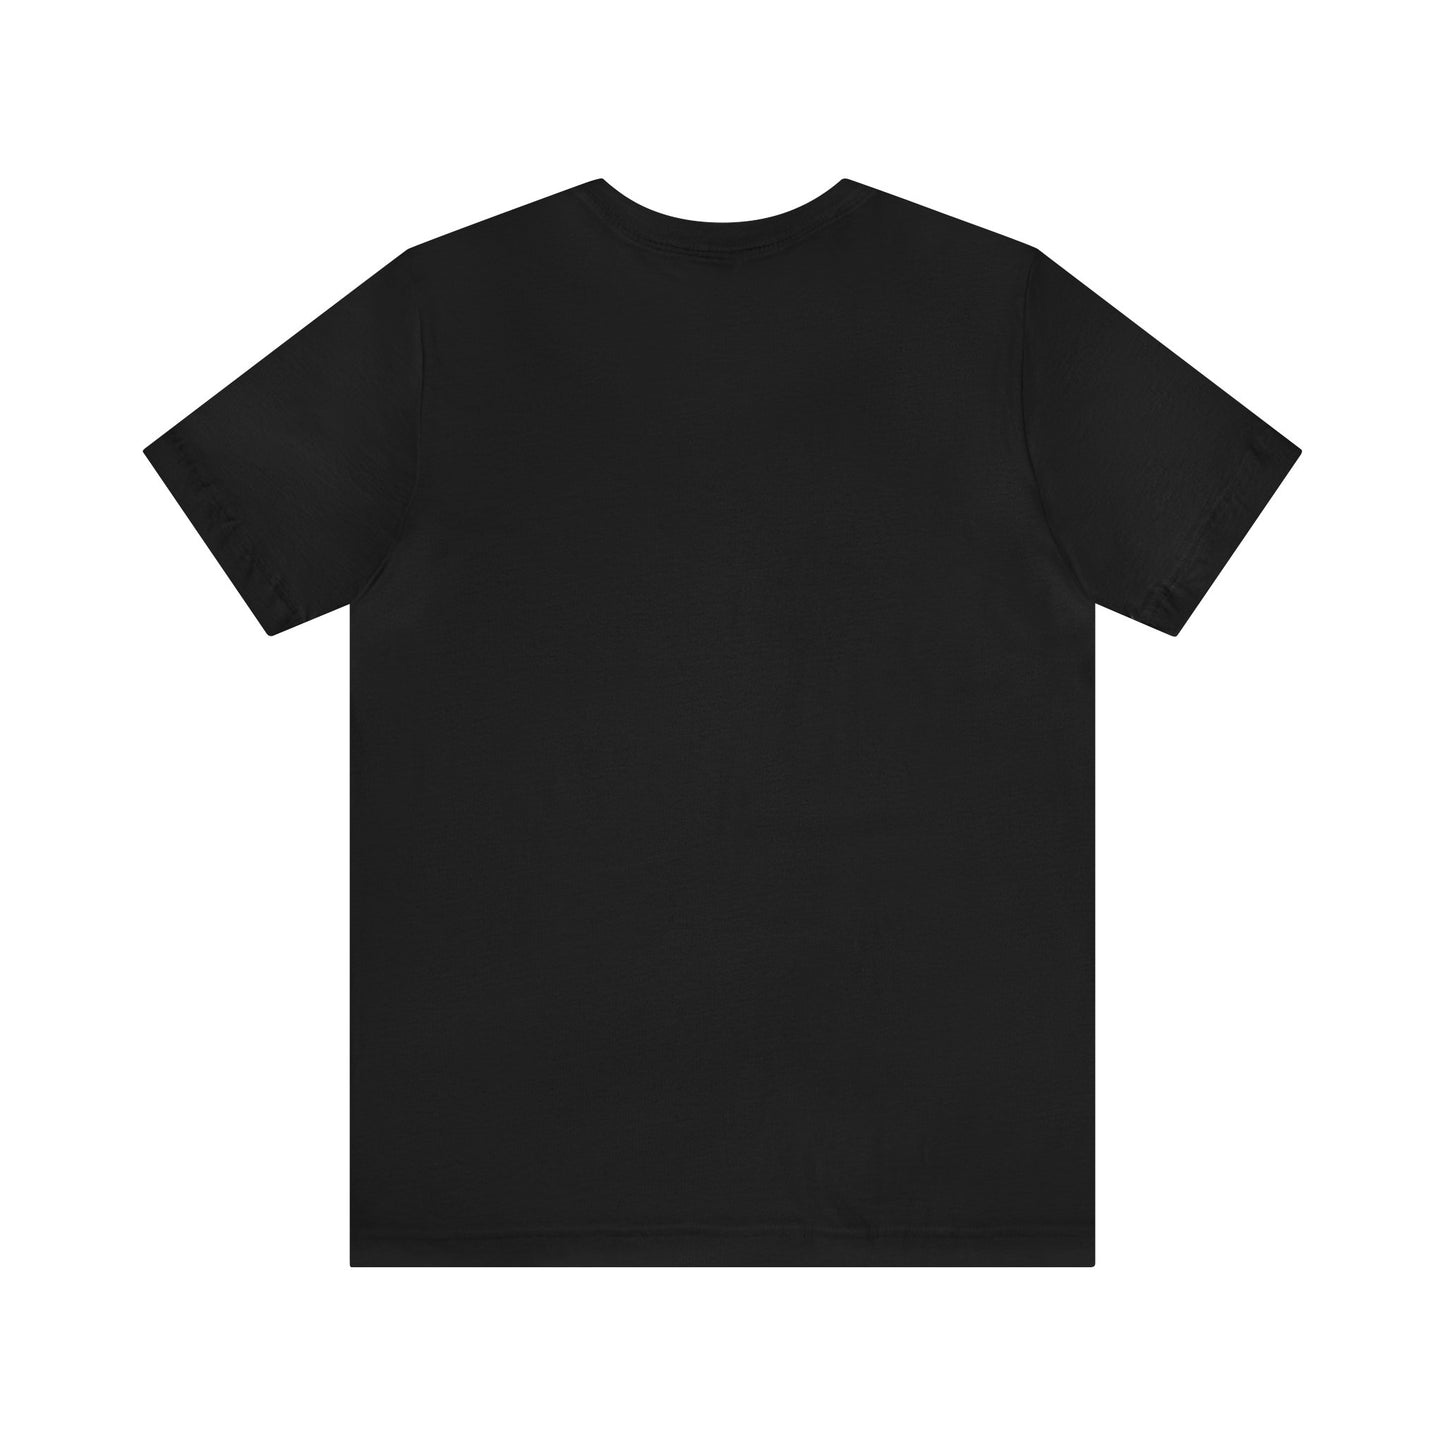 Unisex T-shirt Merch Spaiceman I Like Party